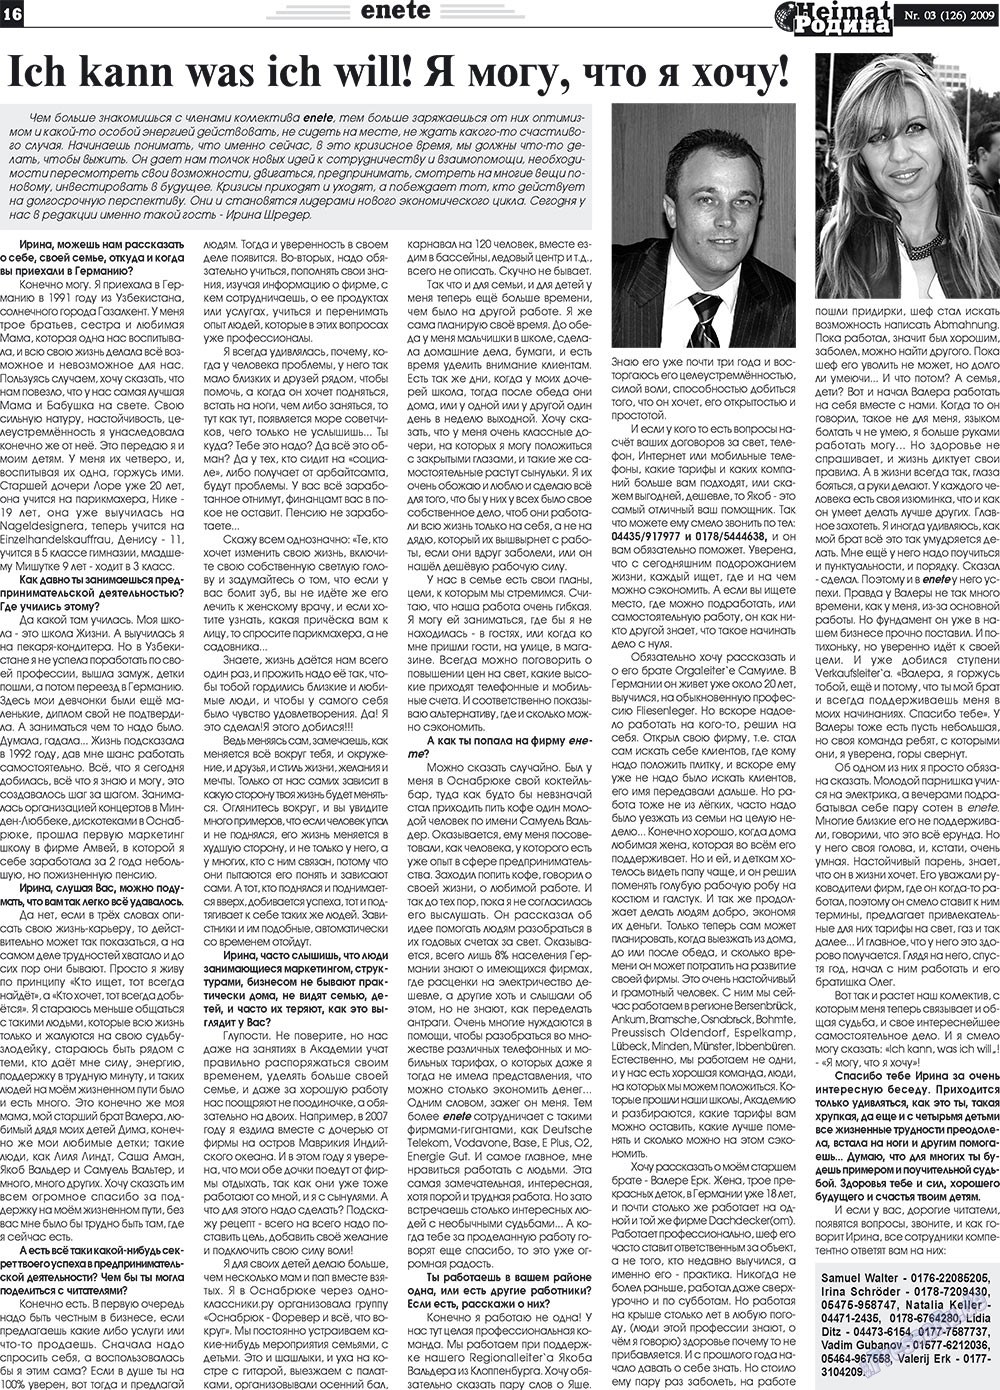 Heimat-Родина, газета. 2009 №3 стр.16